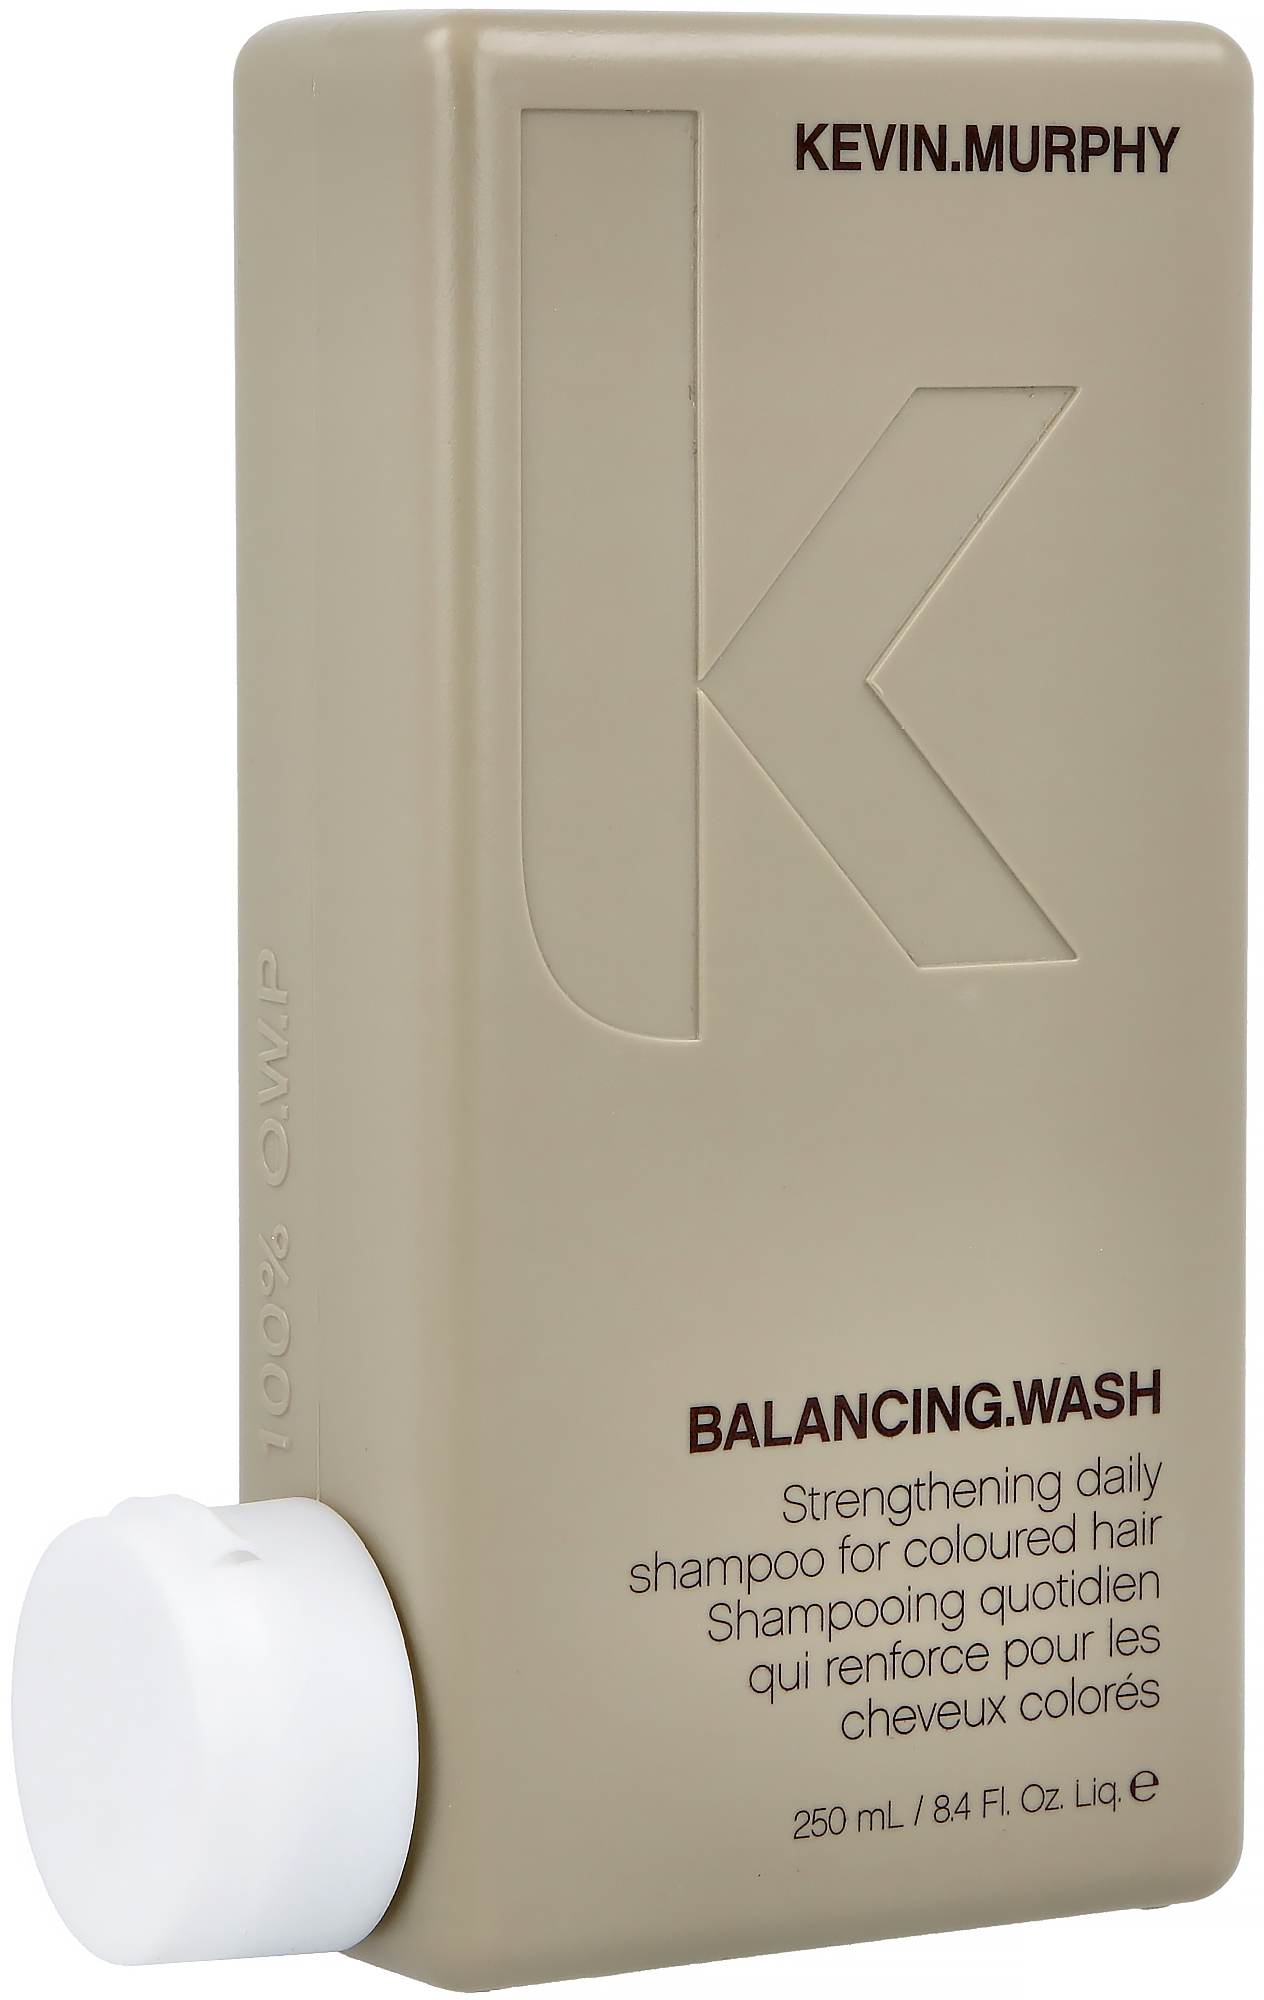 Kevin Murphy Balancing Wash Shampoo